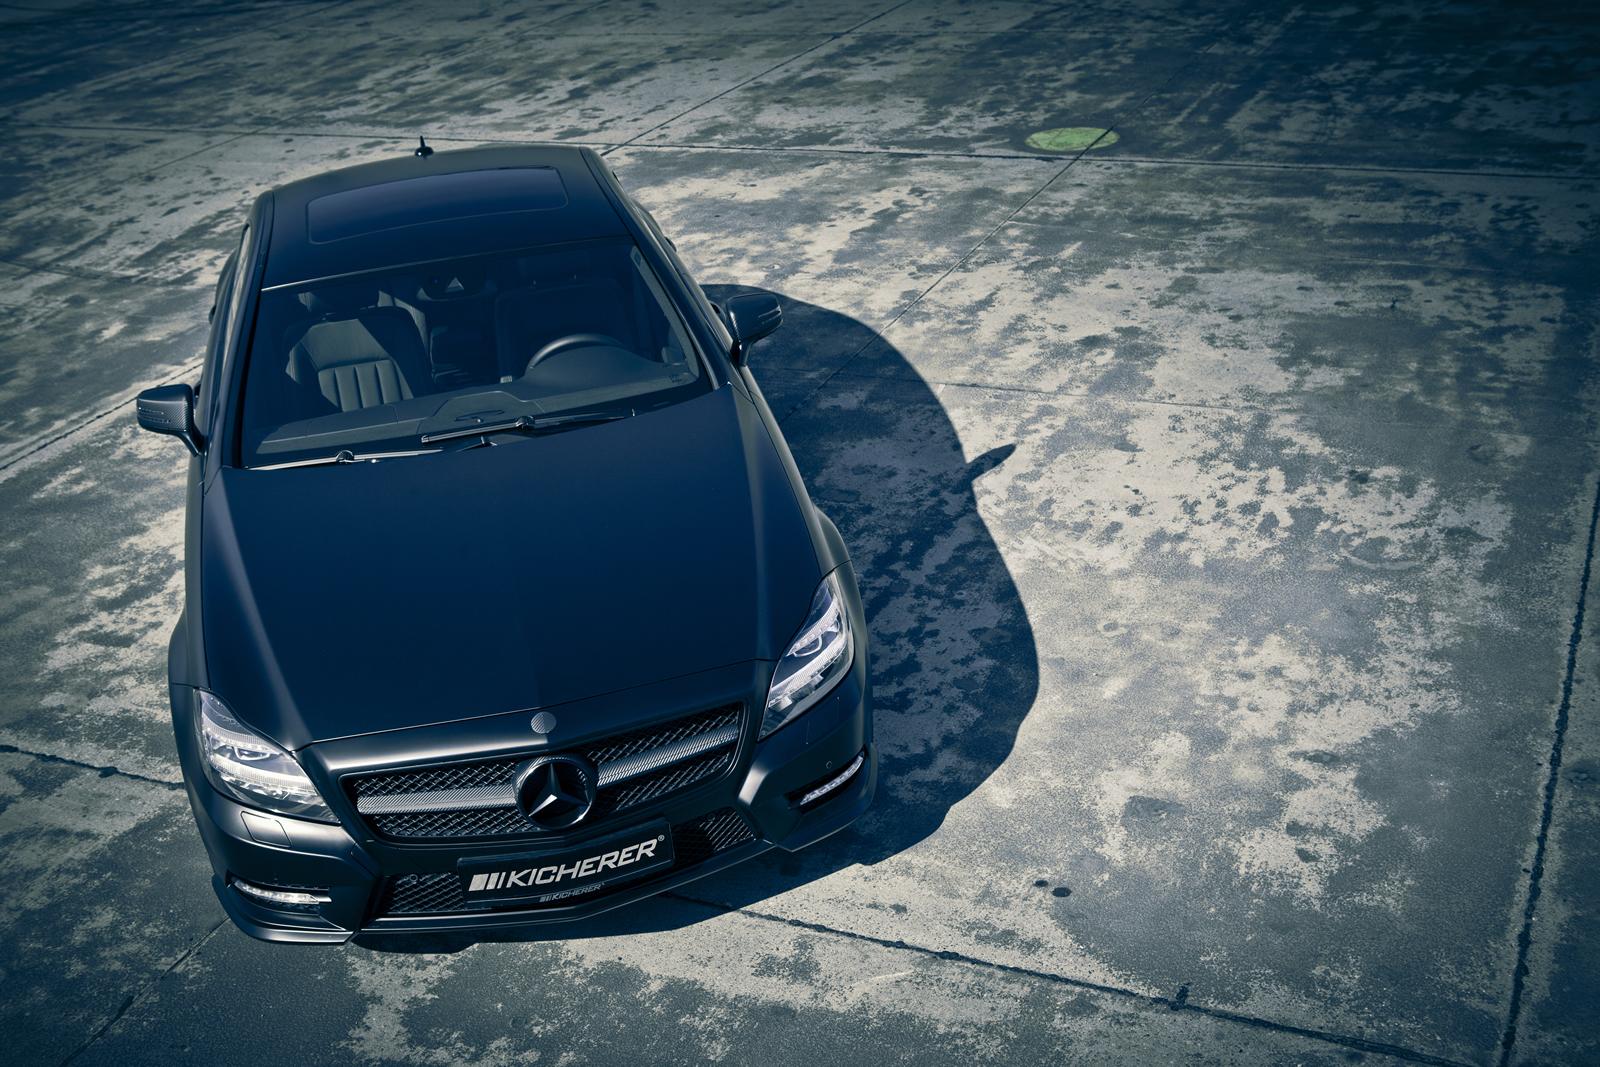 Kicherer Mercedes CLS Edition Black